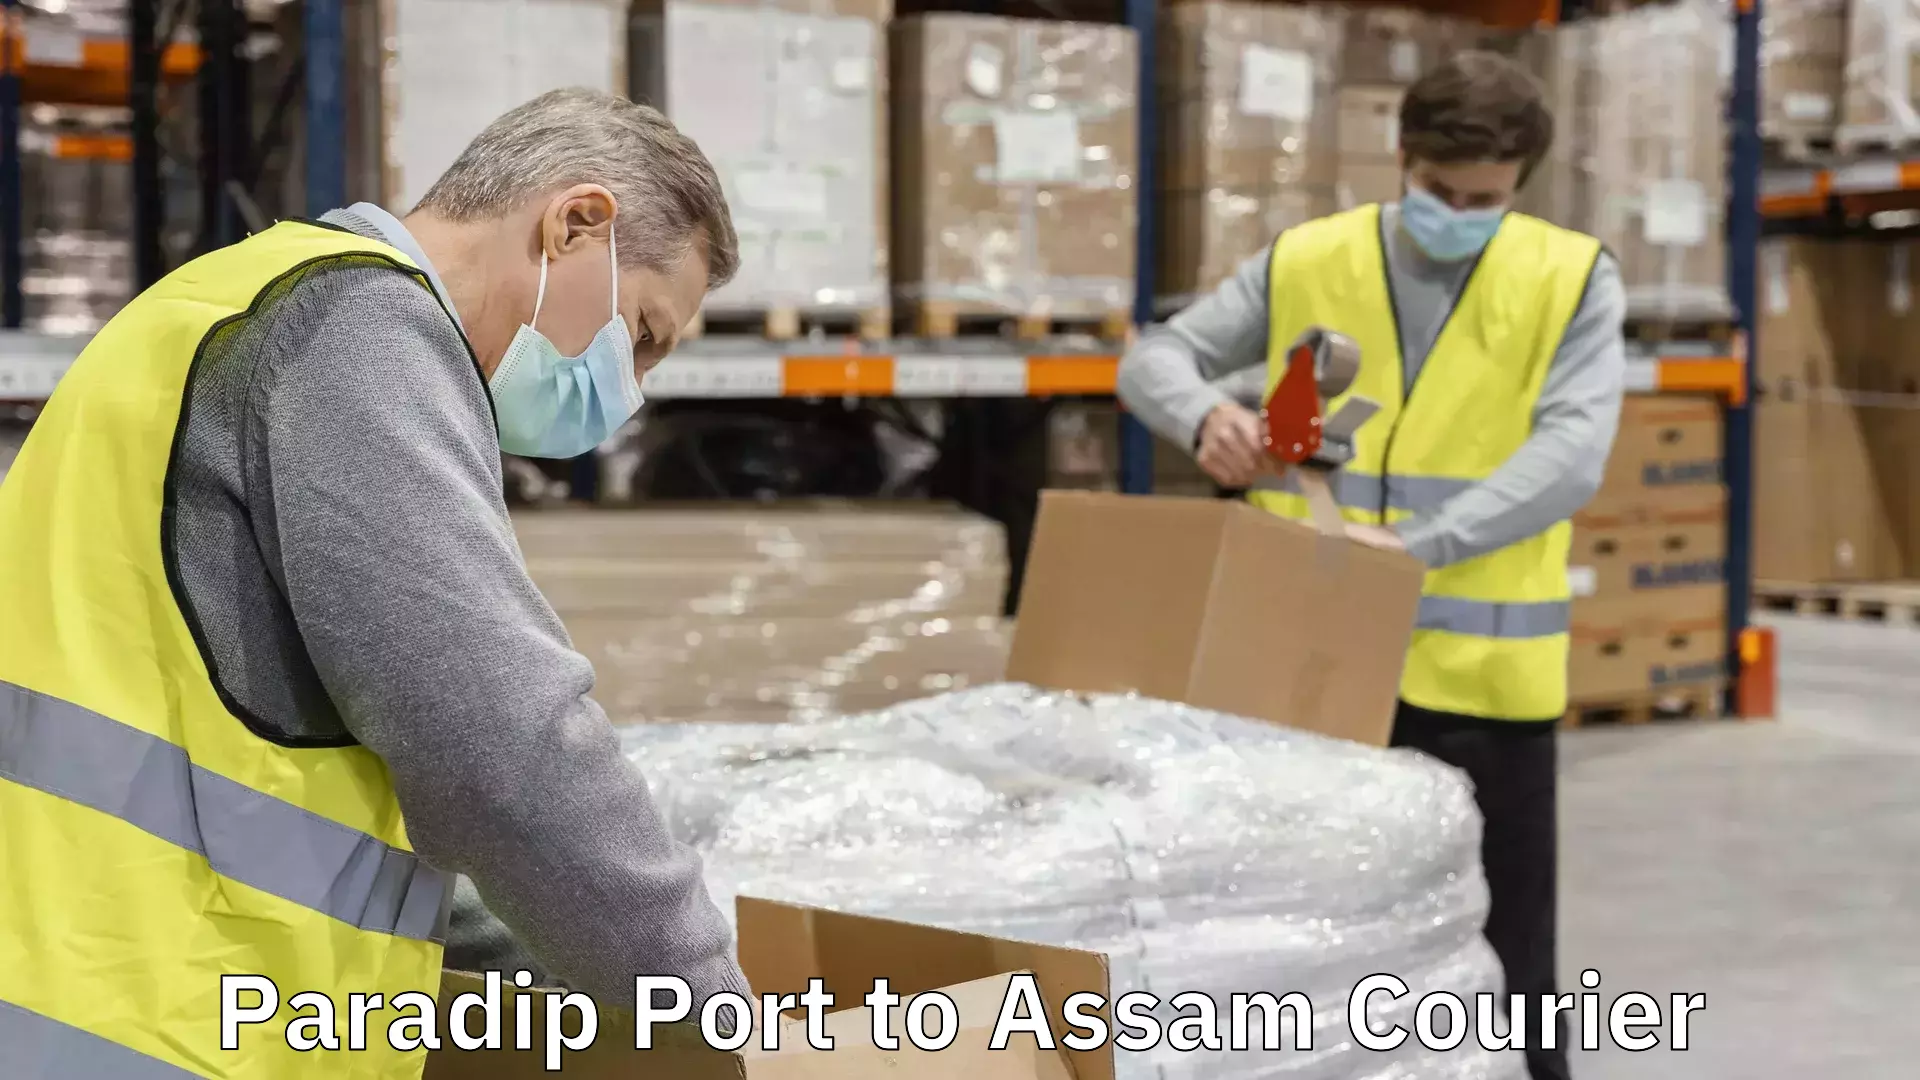 Courier service partnerships Paradip Port to Assam